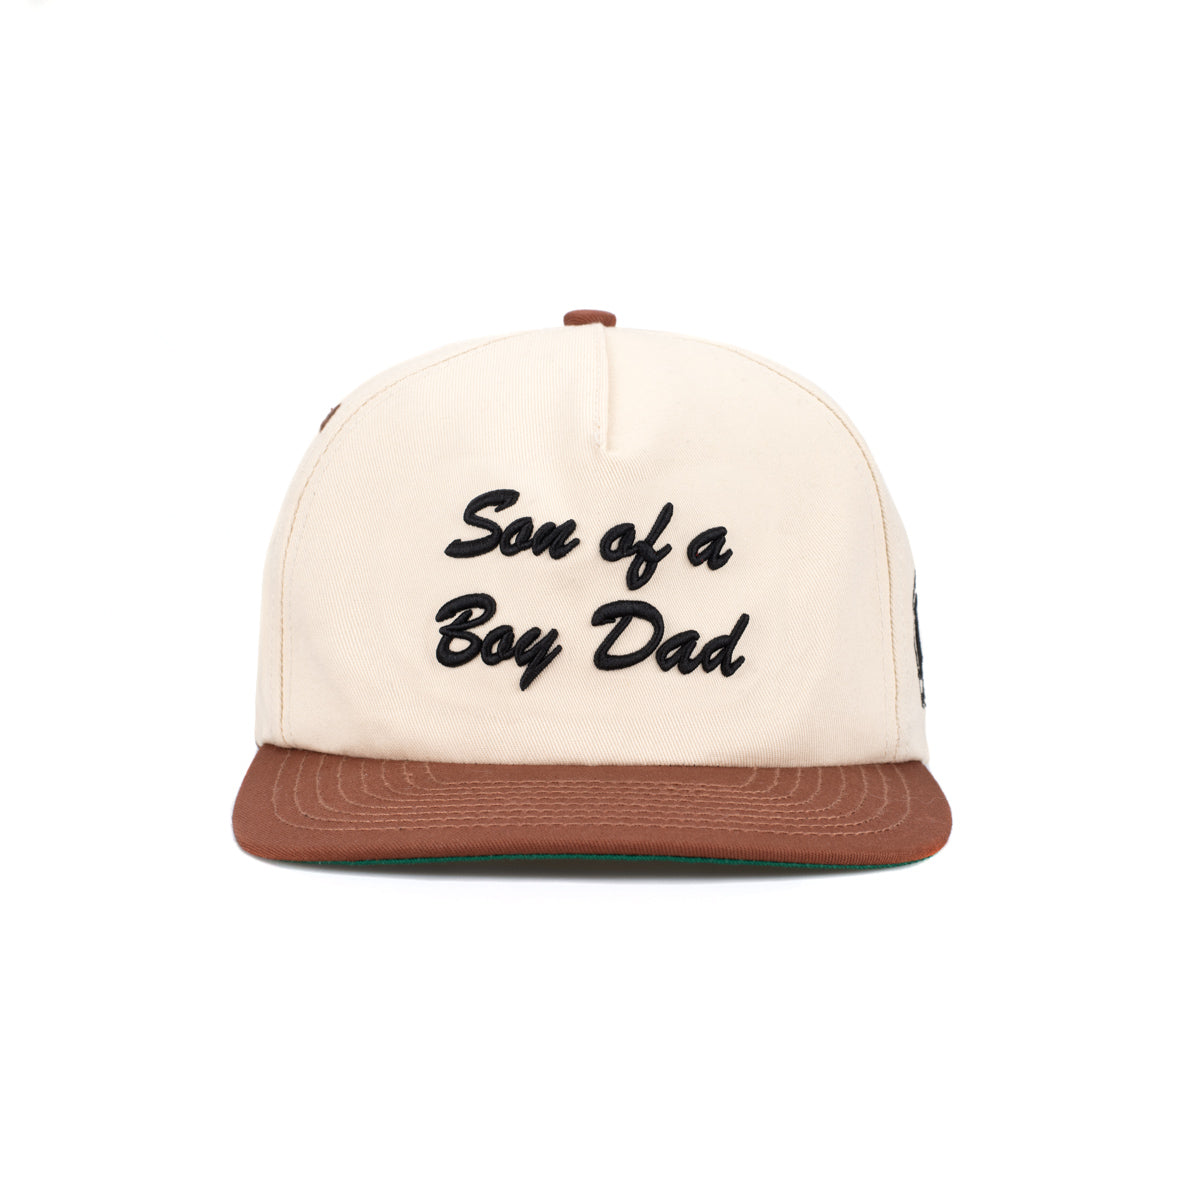 Son of a Boy Dad Retro Golf Hat-Hats-Son of a Boy Dad-White-One Size-Barstool Sports